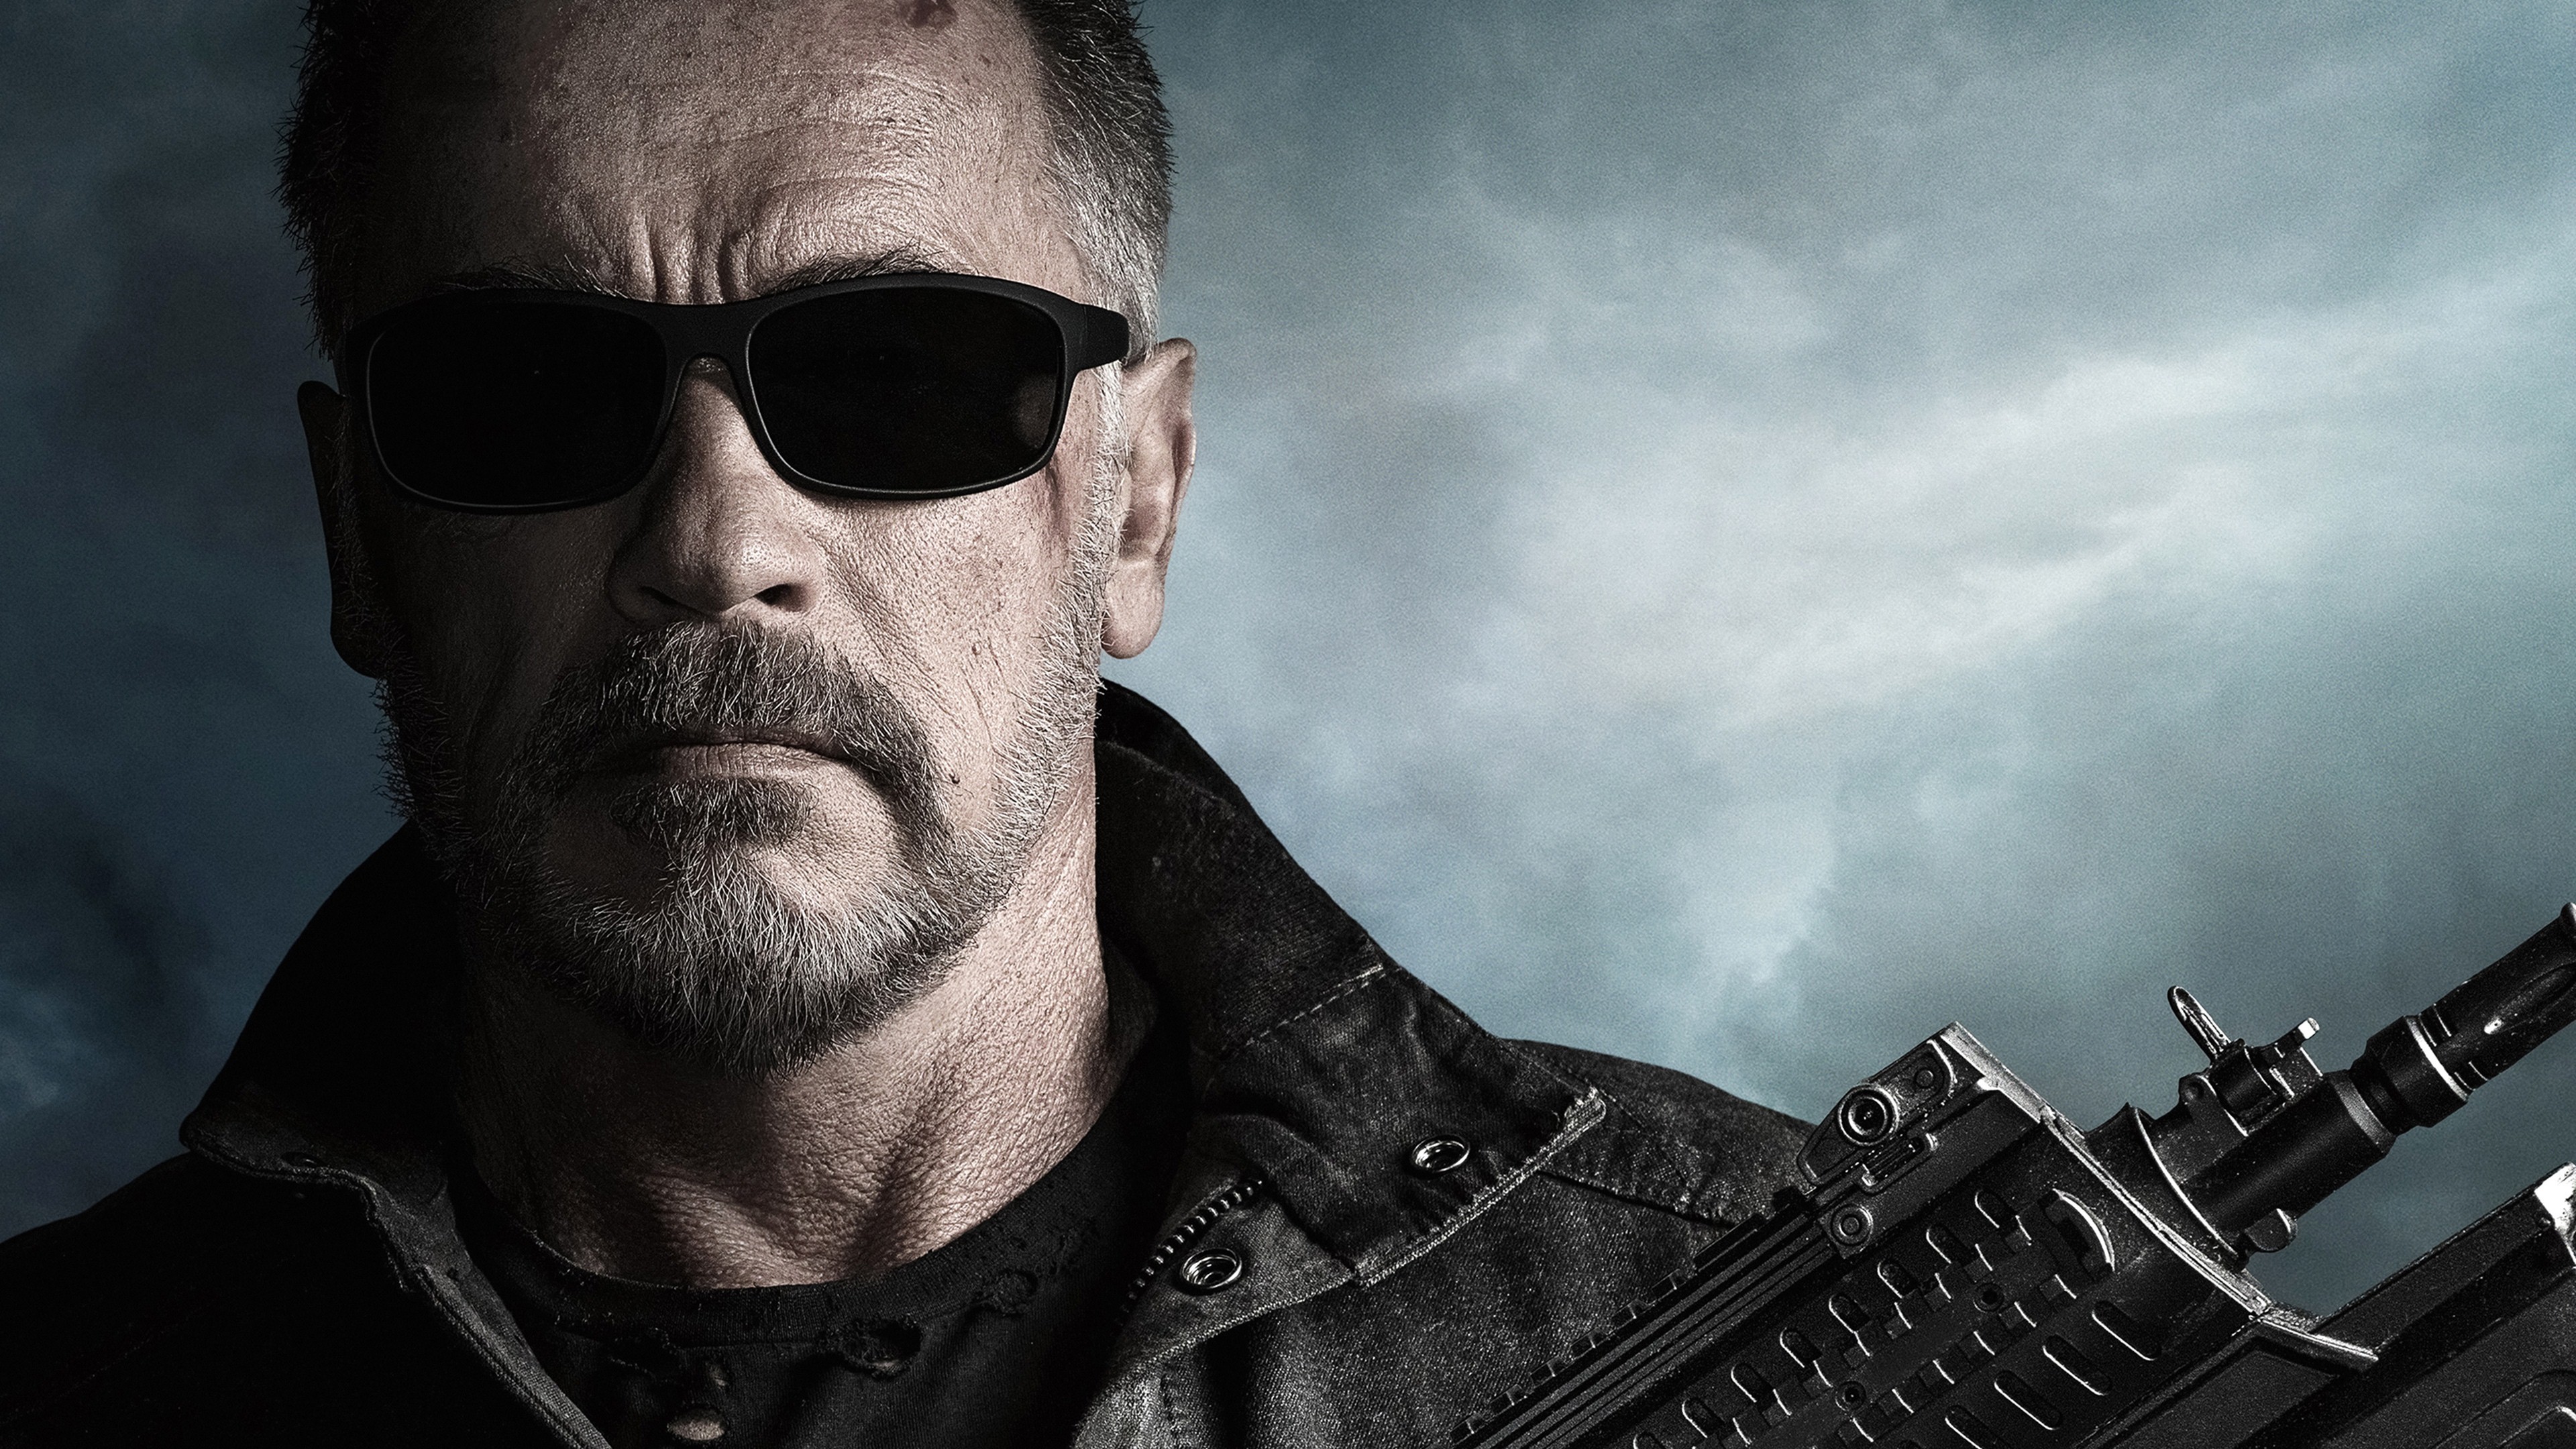 4k Wallpaper Of Terminator Dark Fate Actor Arnold Schwarzenegger - Terminator Dark Fate Arnold Schwarzenegger - HD Wallpaper 